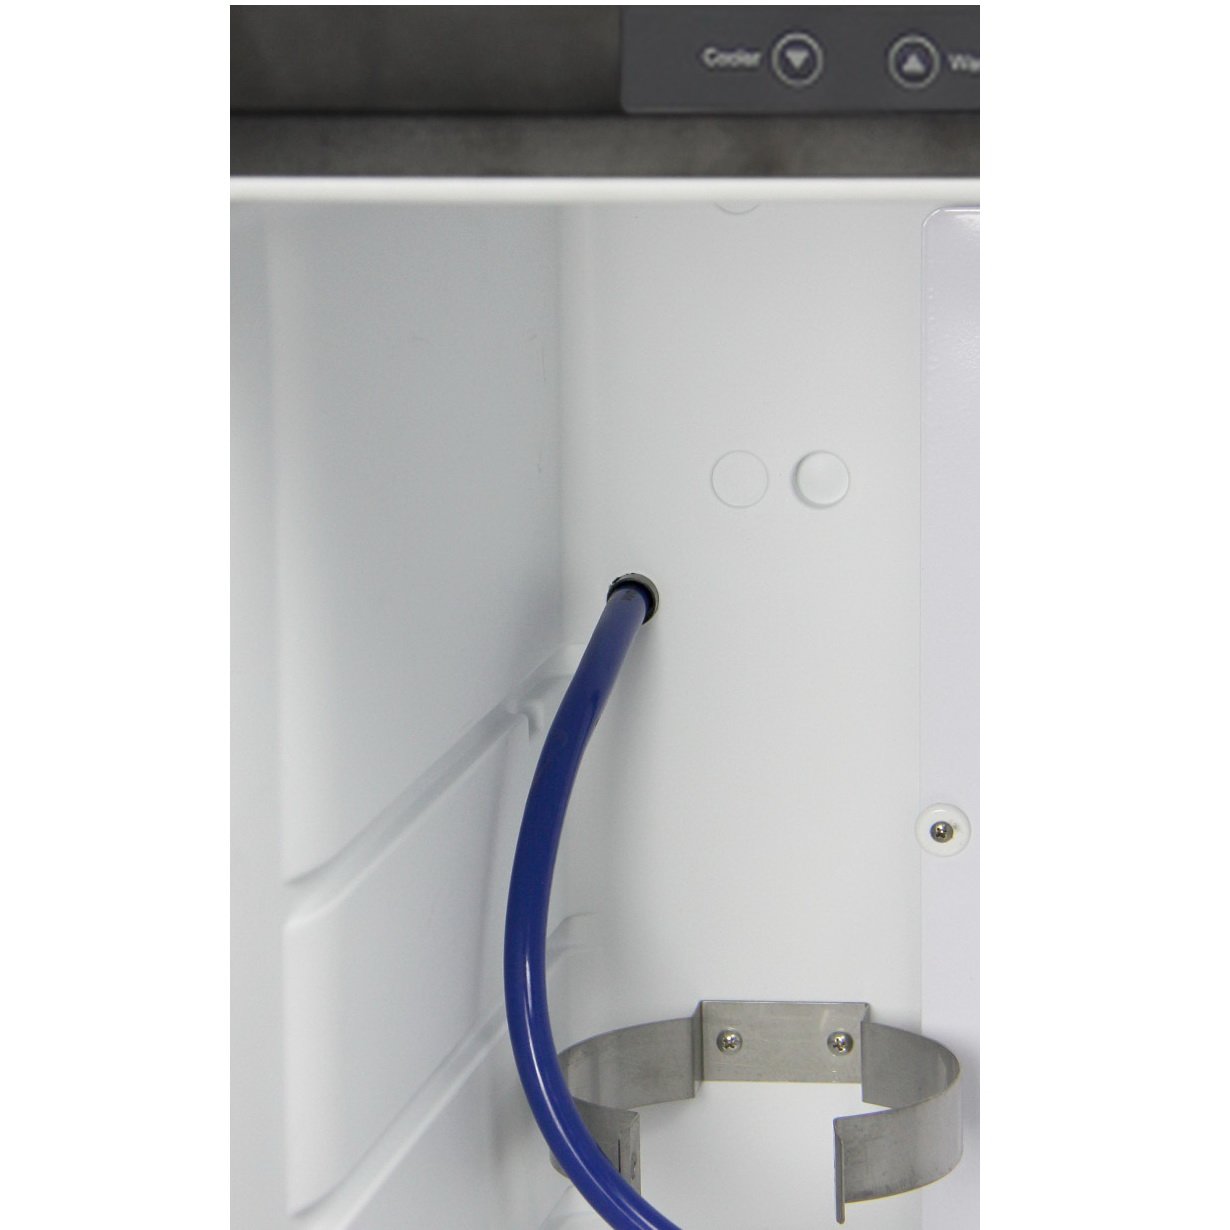 Kegco Triple Keg Tap Faucet Digital Kegerator - Black Matte Cabinet and Door